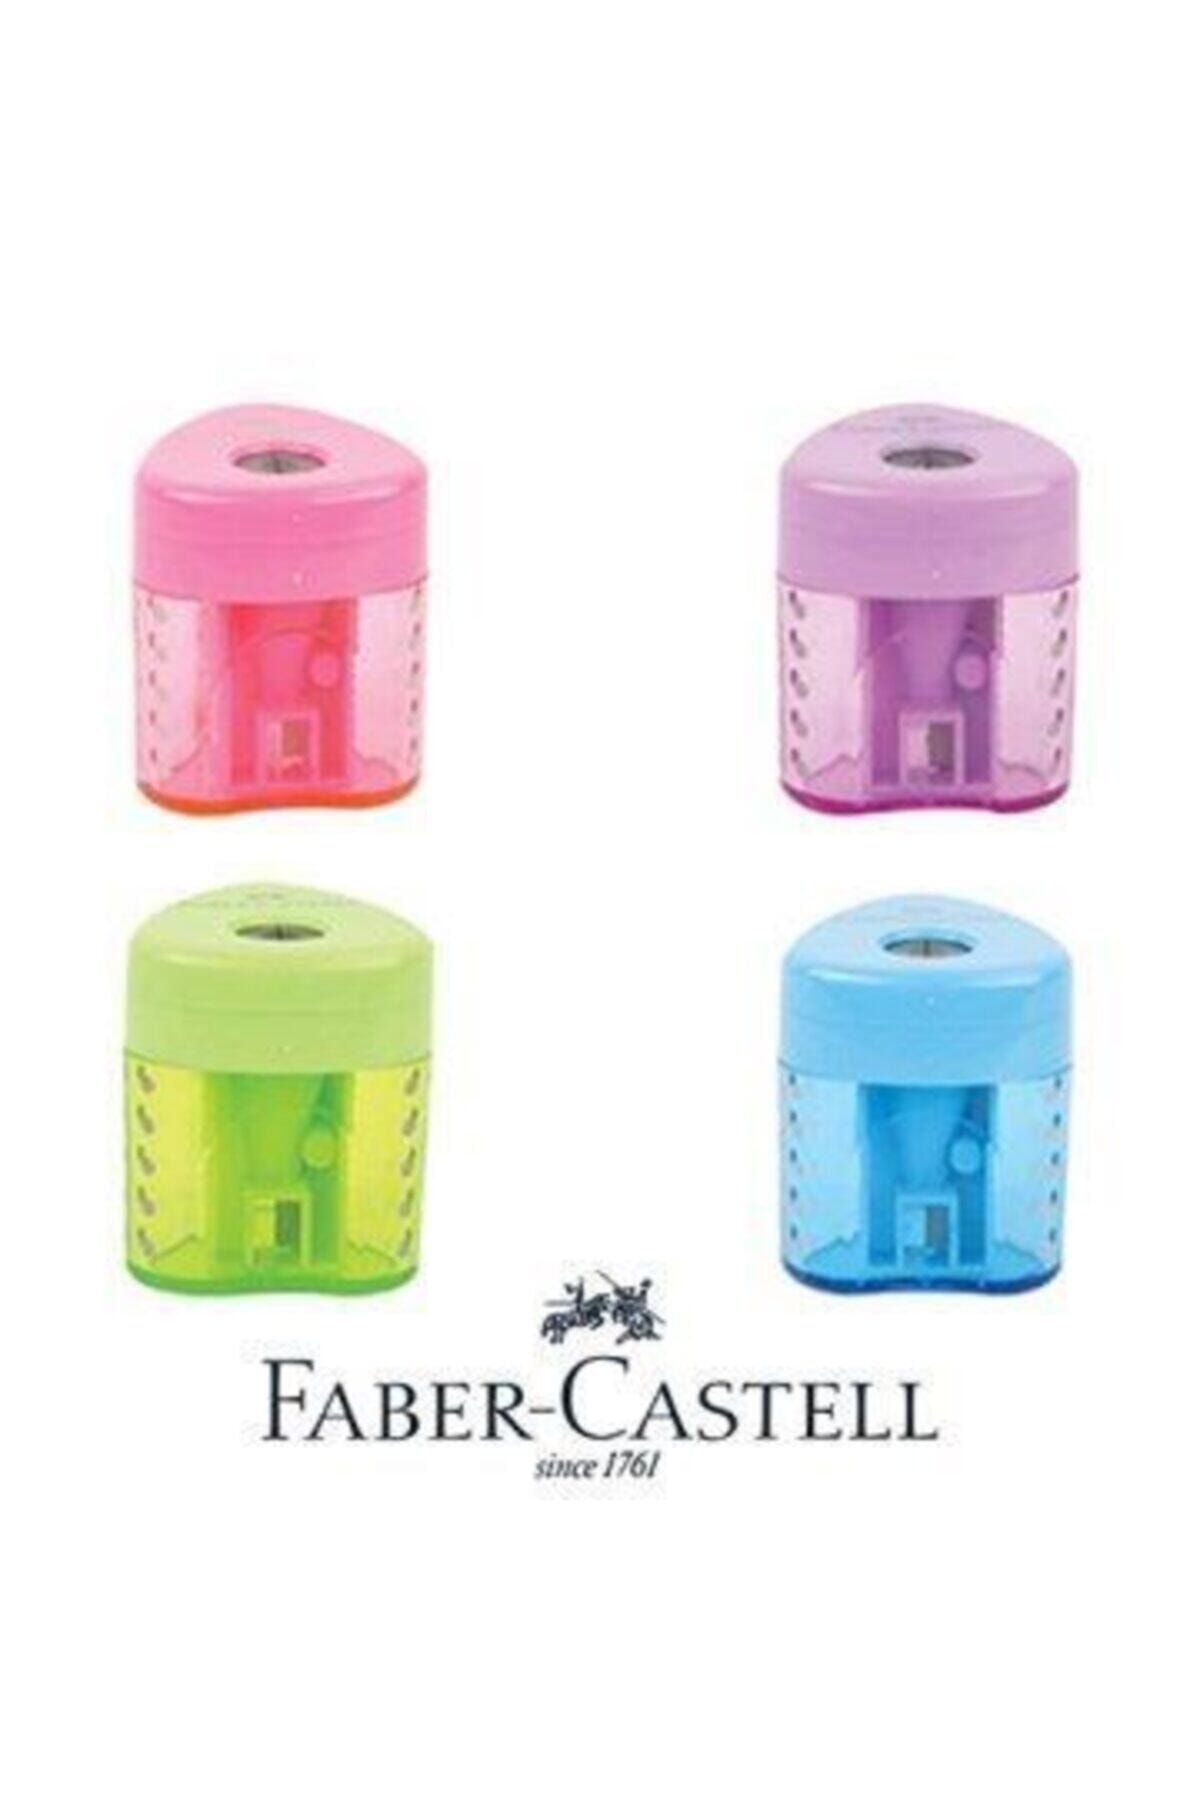 Faber Castell Grip Auto Canlı Renkler Kalemtraş 4 Adet